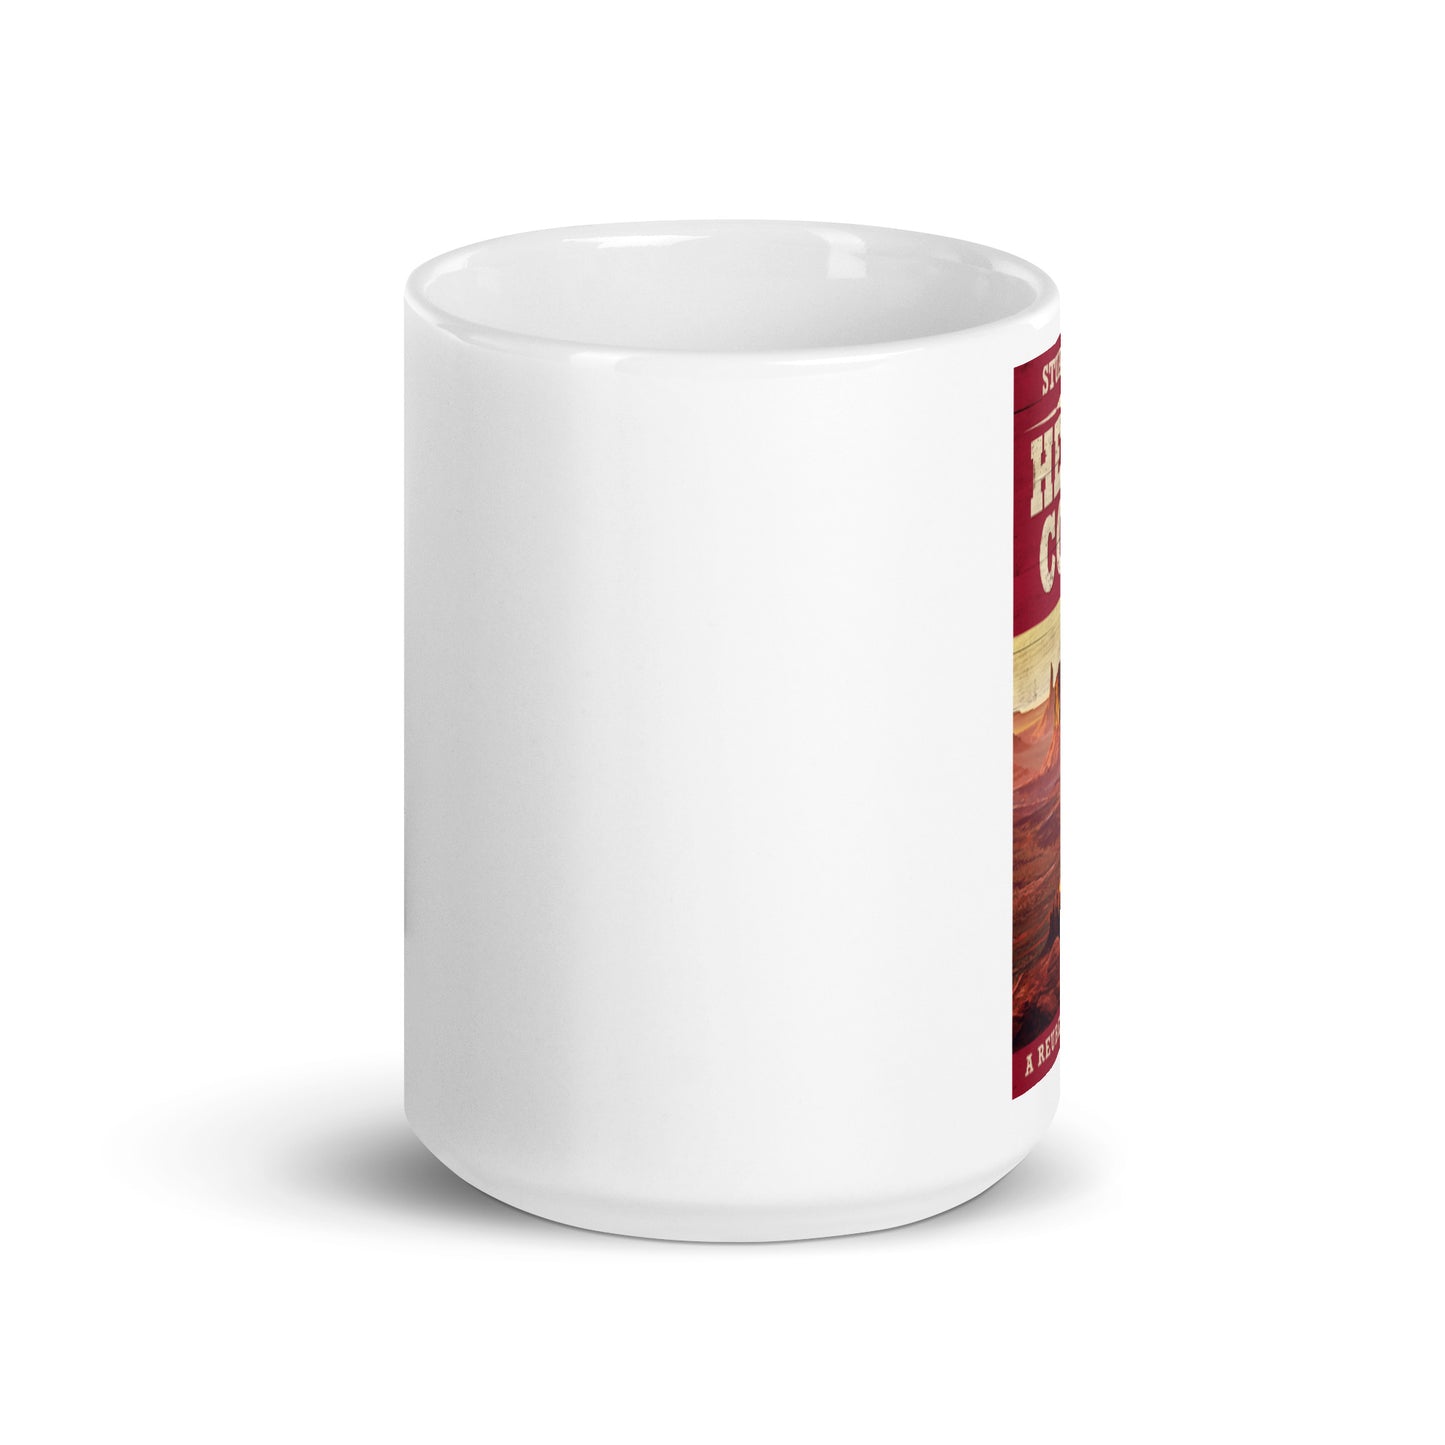 He Who Comes - White Coffee Mug